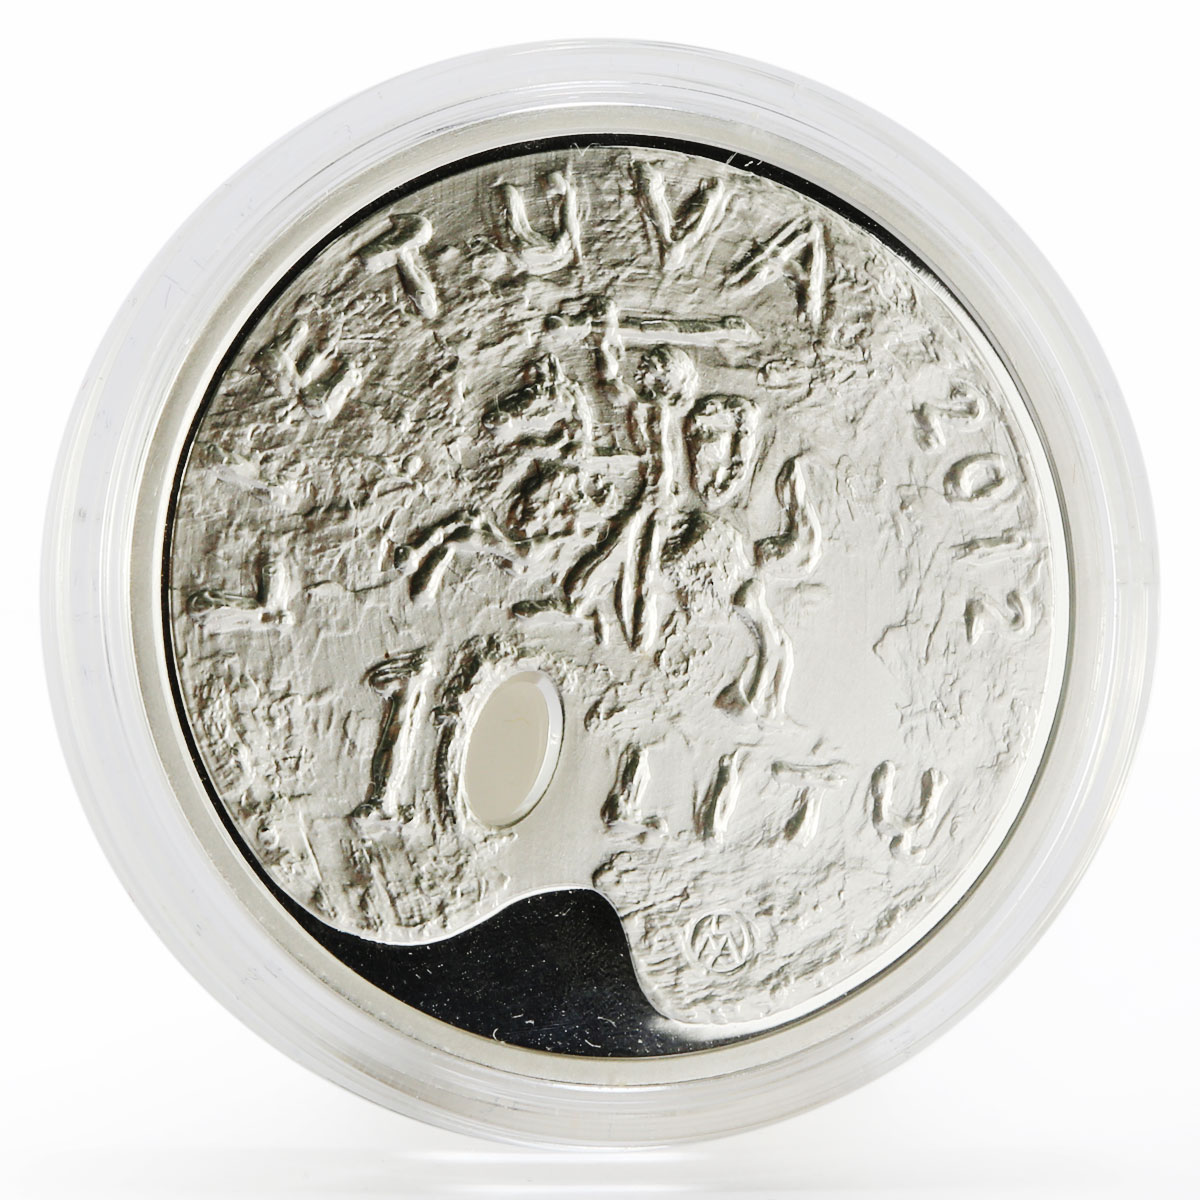 Lithuania 10 litu Lithuanian Culture series Fine Arts proof silver coin 2012